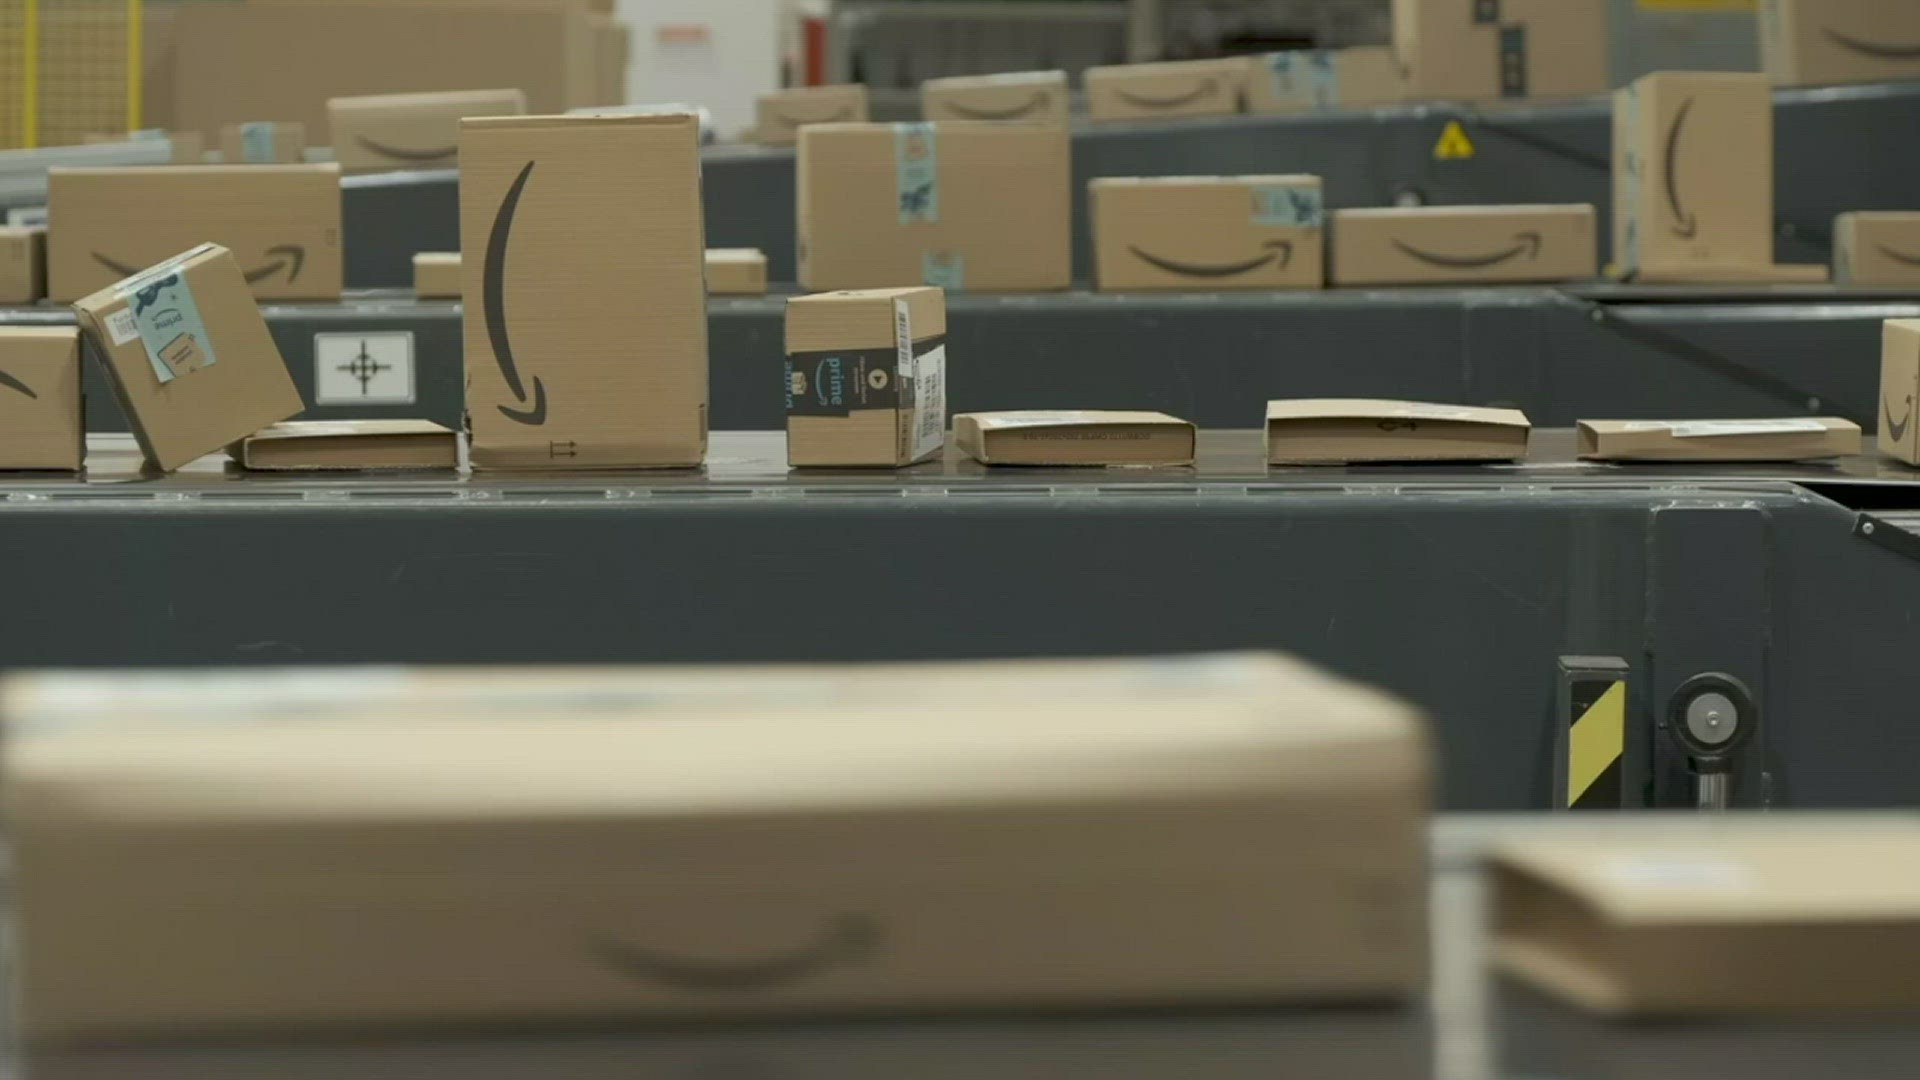 Veuer's Elizabeth Keatinge tells us why Amazon shut down its ambassador program.